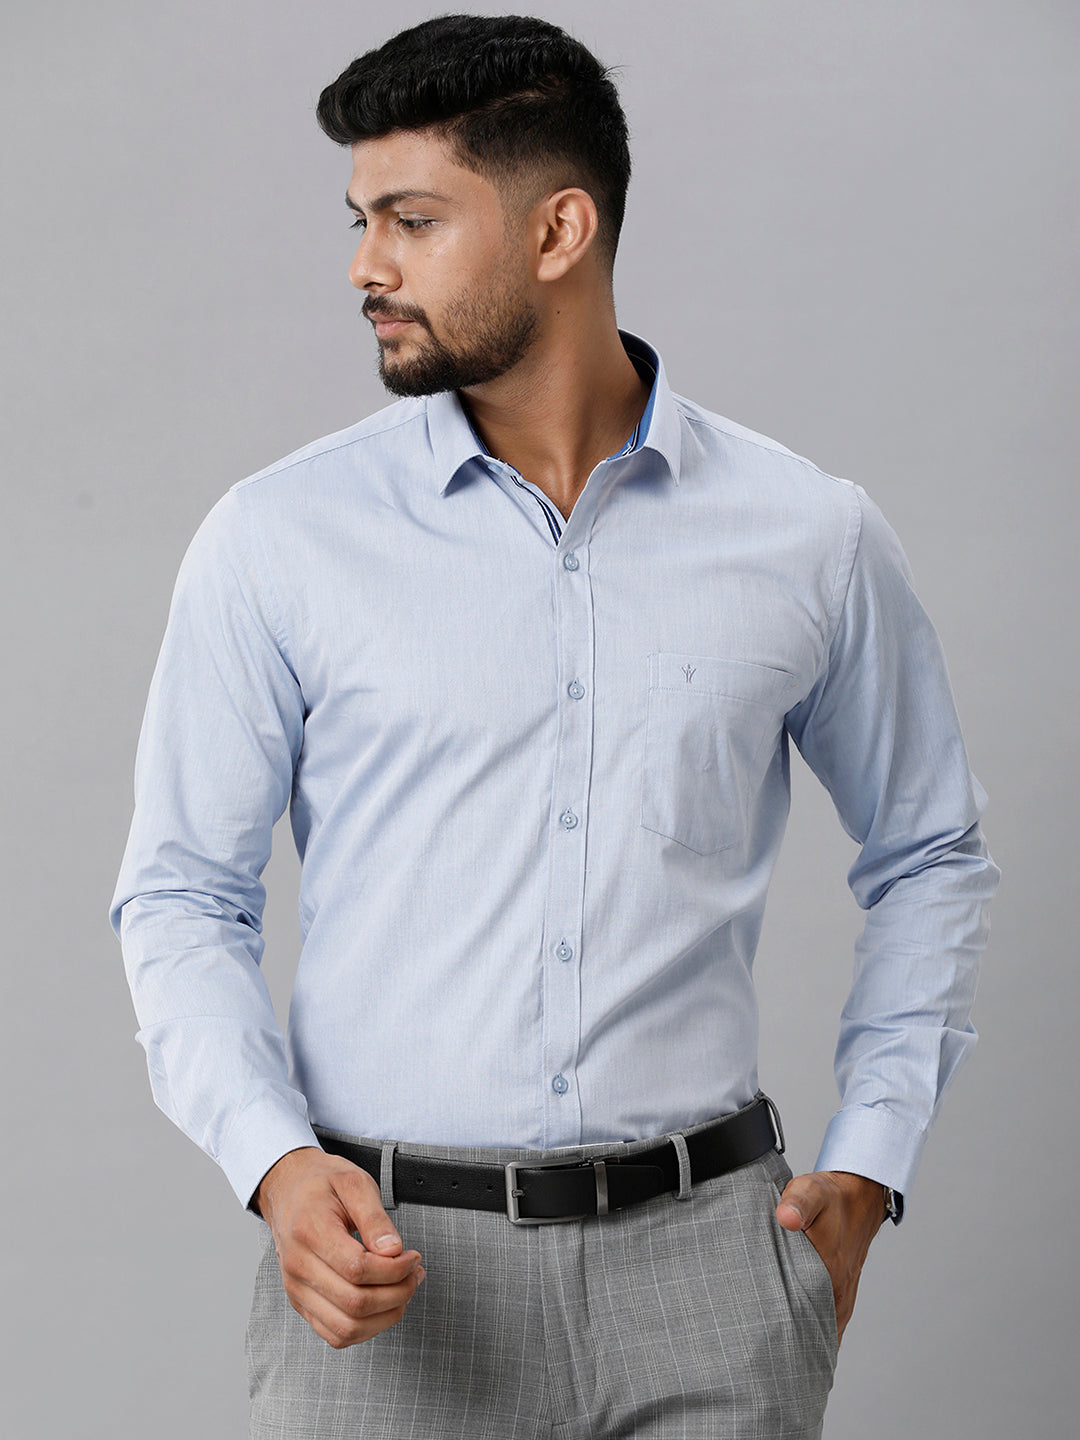 Mens Premium Cotton Formal Shirt Full Sleeves Blue MH G119